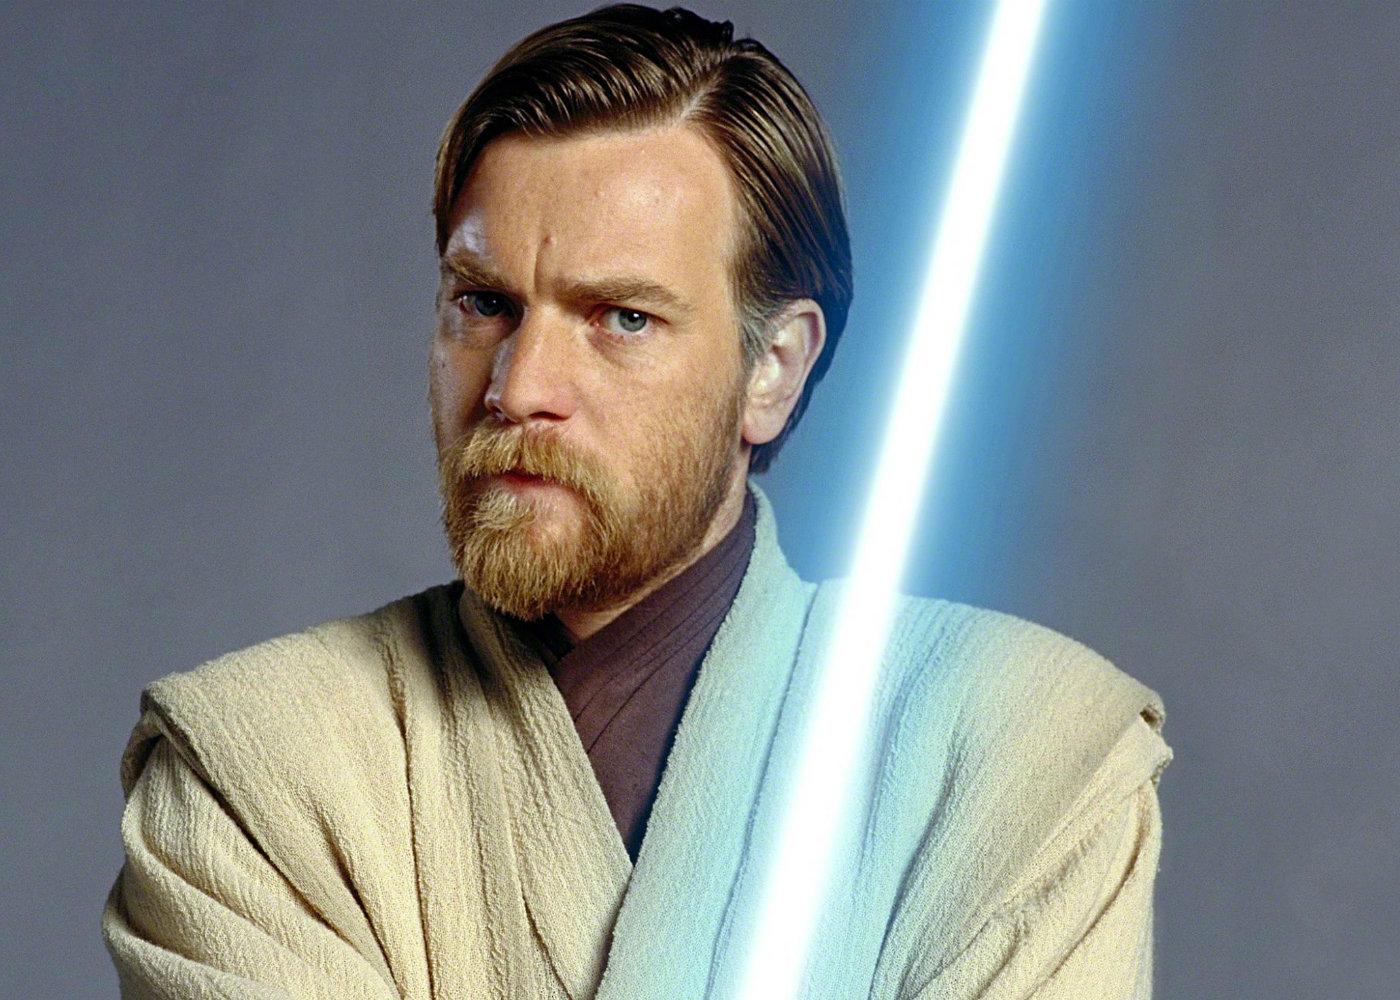 Star Wars Battlefront II Releases Teaser Image for Obi-Wan Kenobi